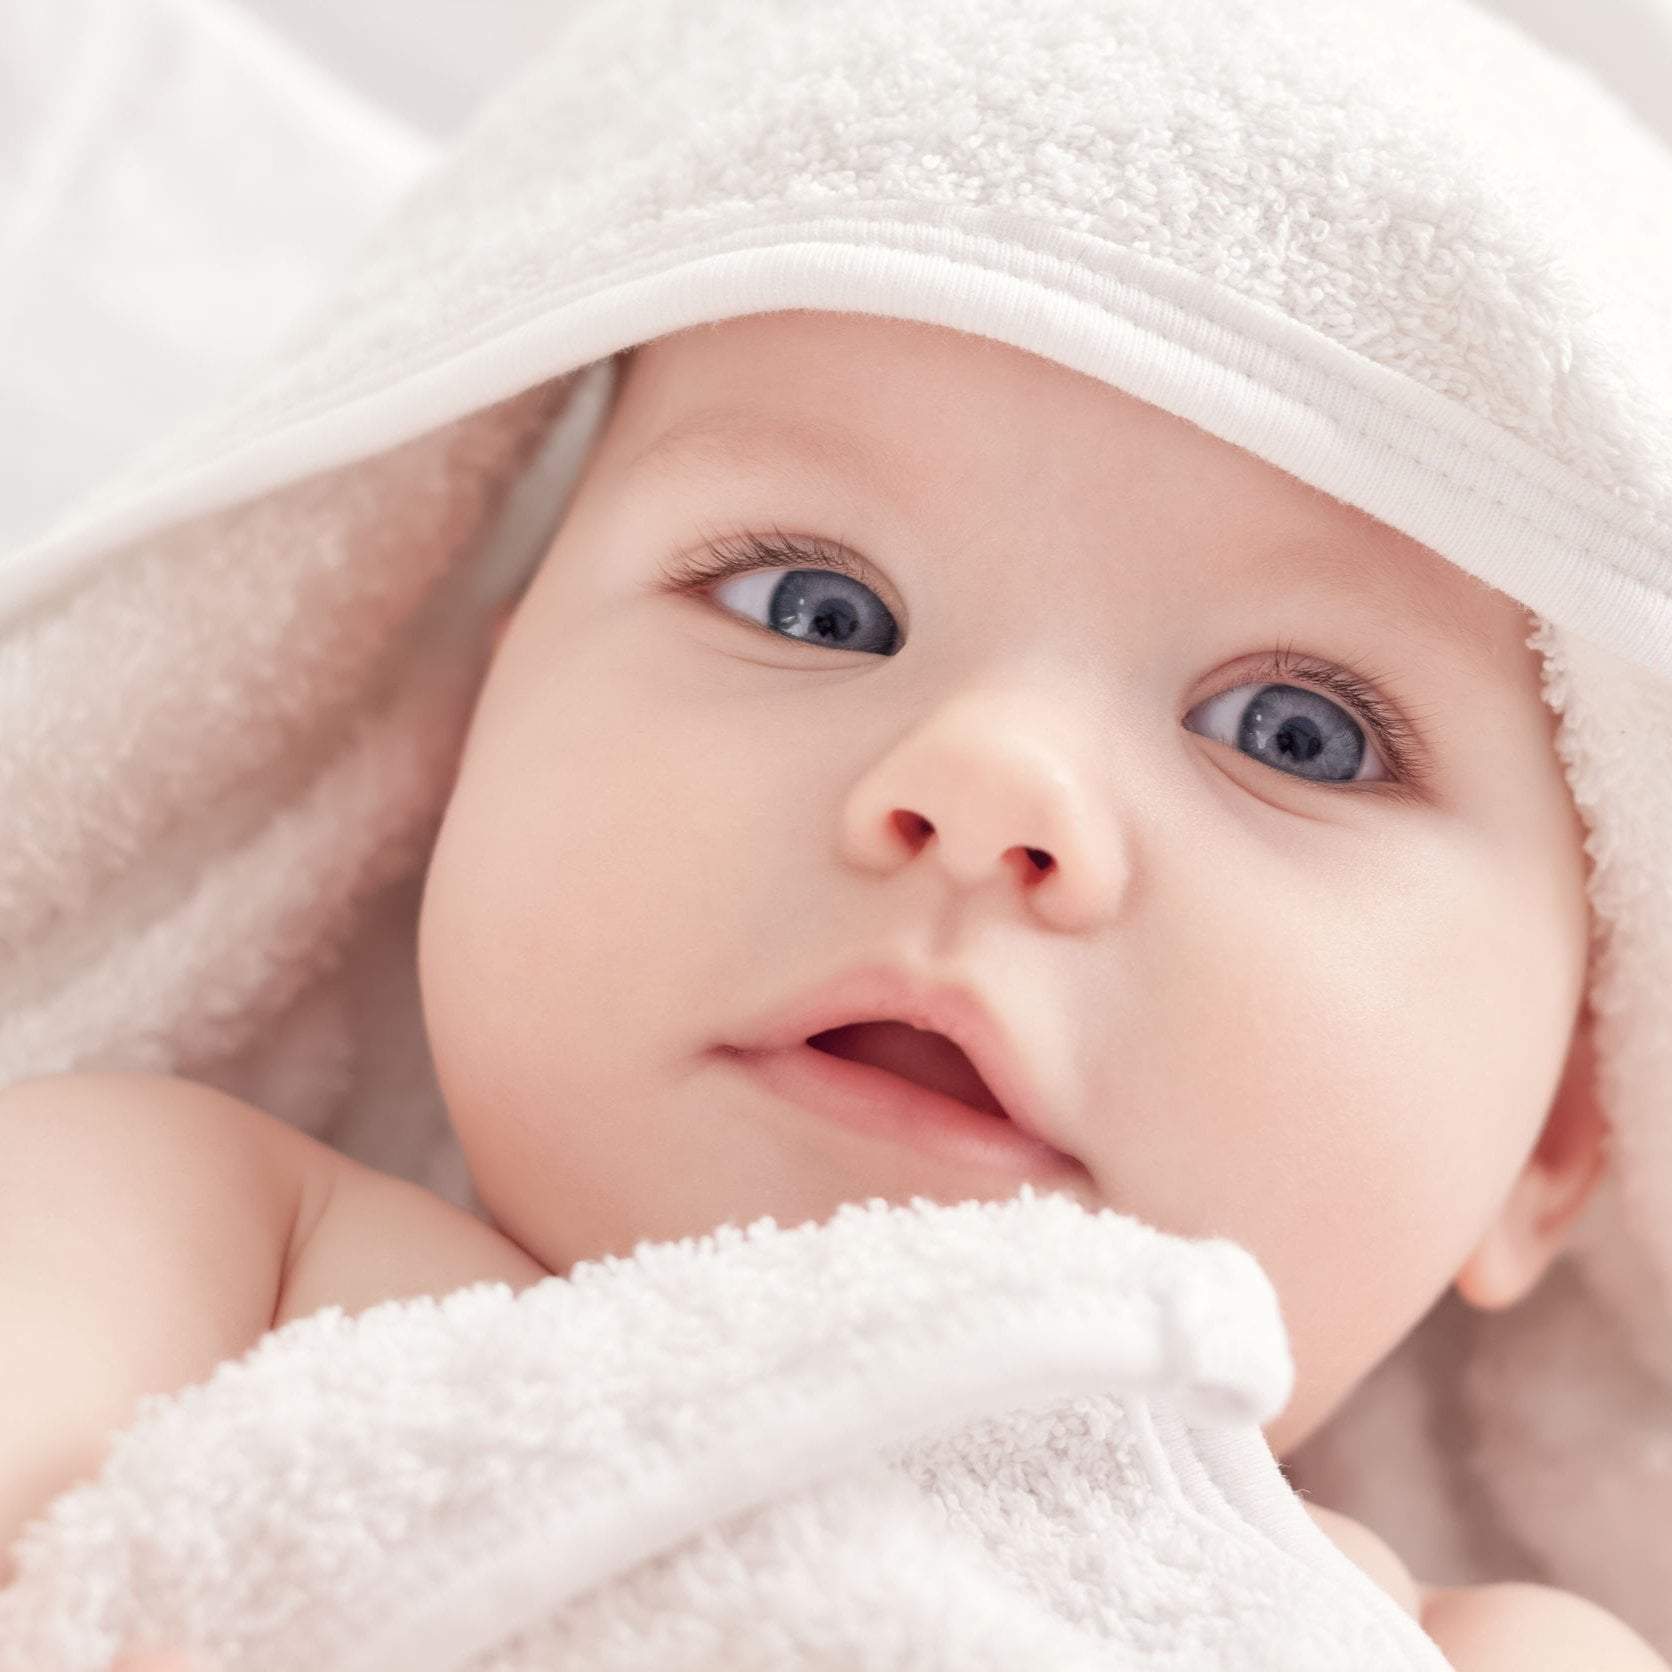 baby-with-eczema-in-bath-towel